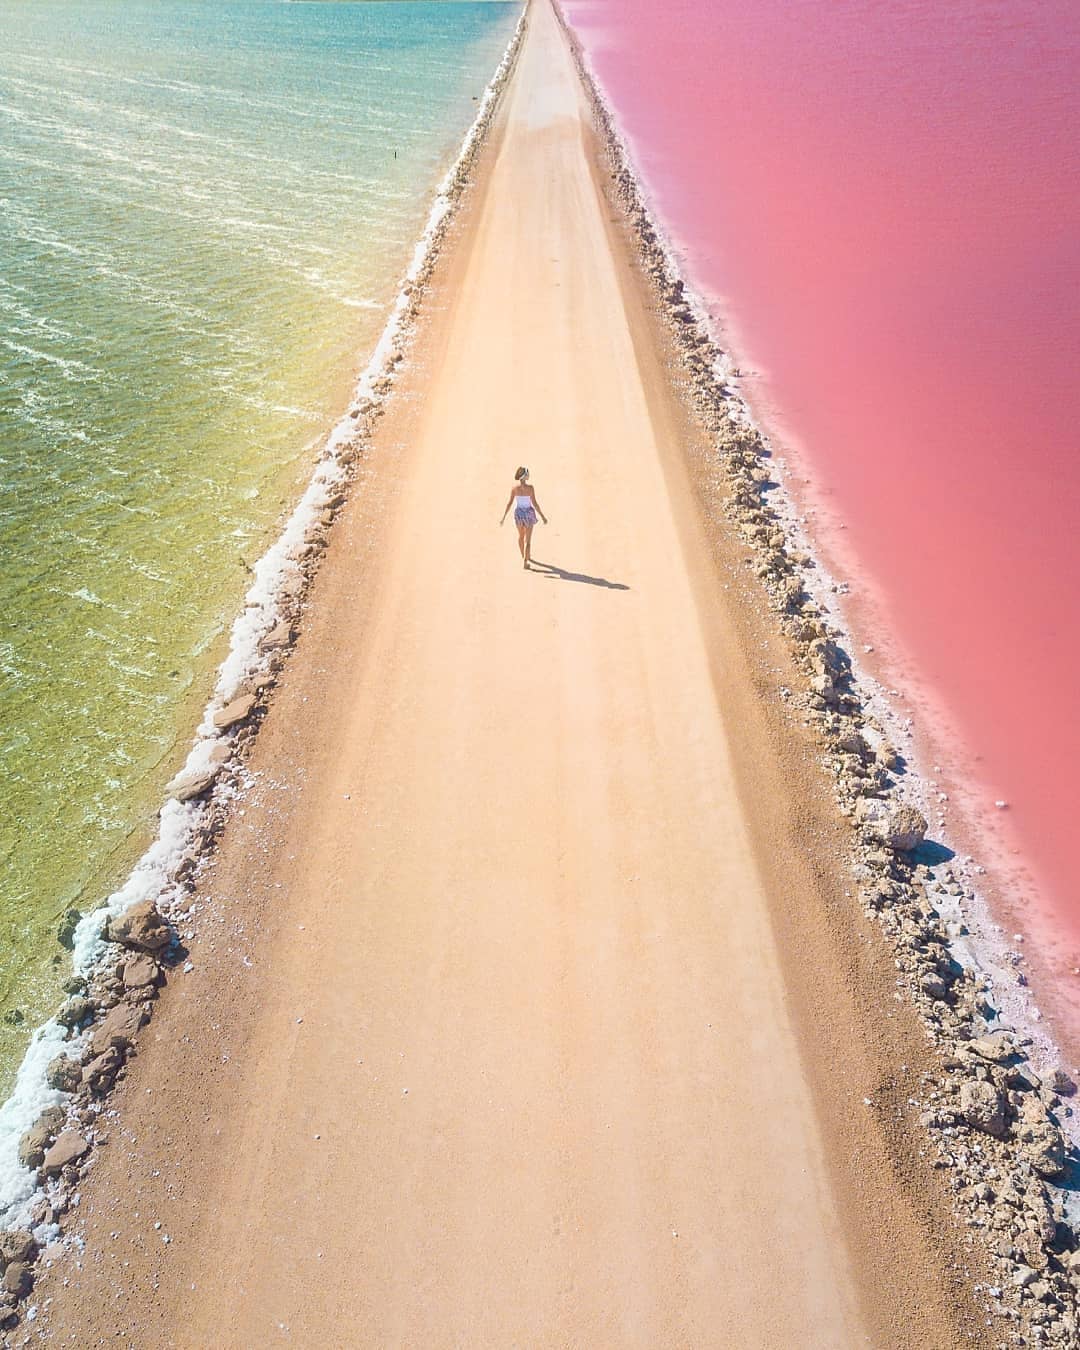 Cactus Beach, South Australia 🔷@Regran_ed from @chloektodd -  Taking a walk down Watermelon Avenue 🍉💚💕
How awesome are these crazy coloured salt lakes!
.
.
.
.
.
#seeaustralia #australialovesyou #exploringaustralia #visitaustralia #ig_australia #australiagram #australia_shotz #cruising_australia #southaustralia #seesouthaustralia #insidesouthaustralia #lakemacdonnell #beautifuldestinations #travelawesome #travelbook #travelgram #travelgoals #adventureaddicts #letsgoeverywhere #vanlifeaustralia #wanderfolk #wanderlust #travelgirl #wearetravelgirls #femmetravel #sheisnotlost #pinklake #eyrepeninsula #tlpicks